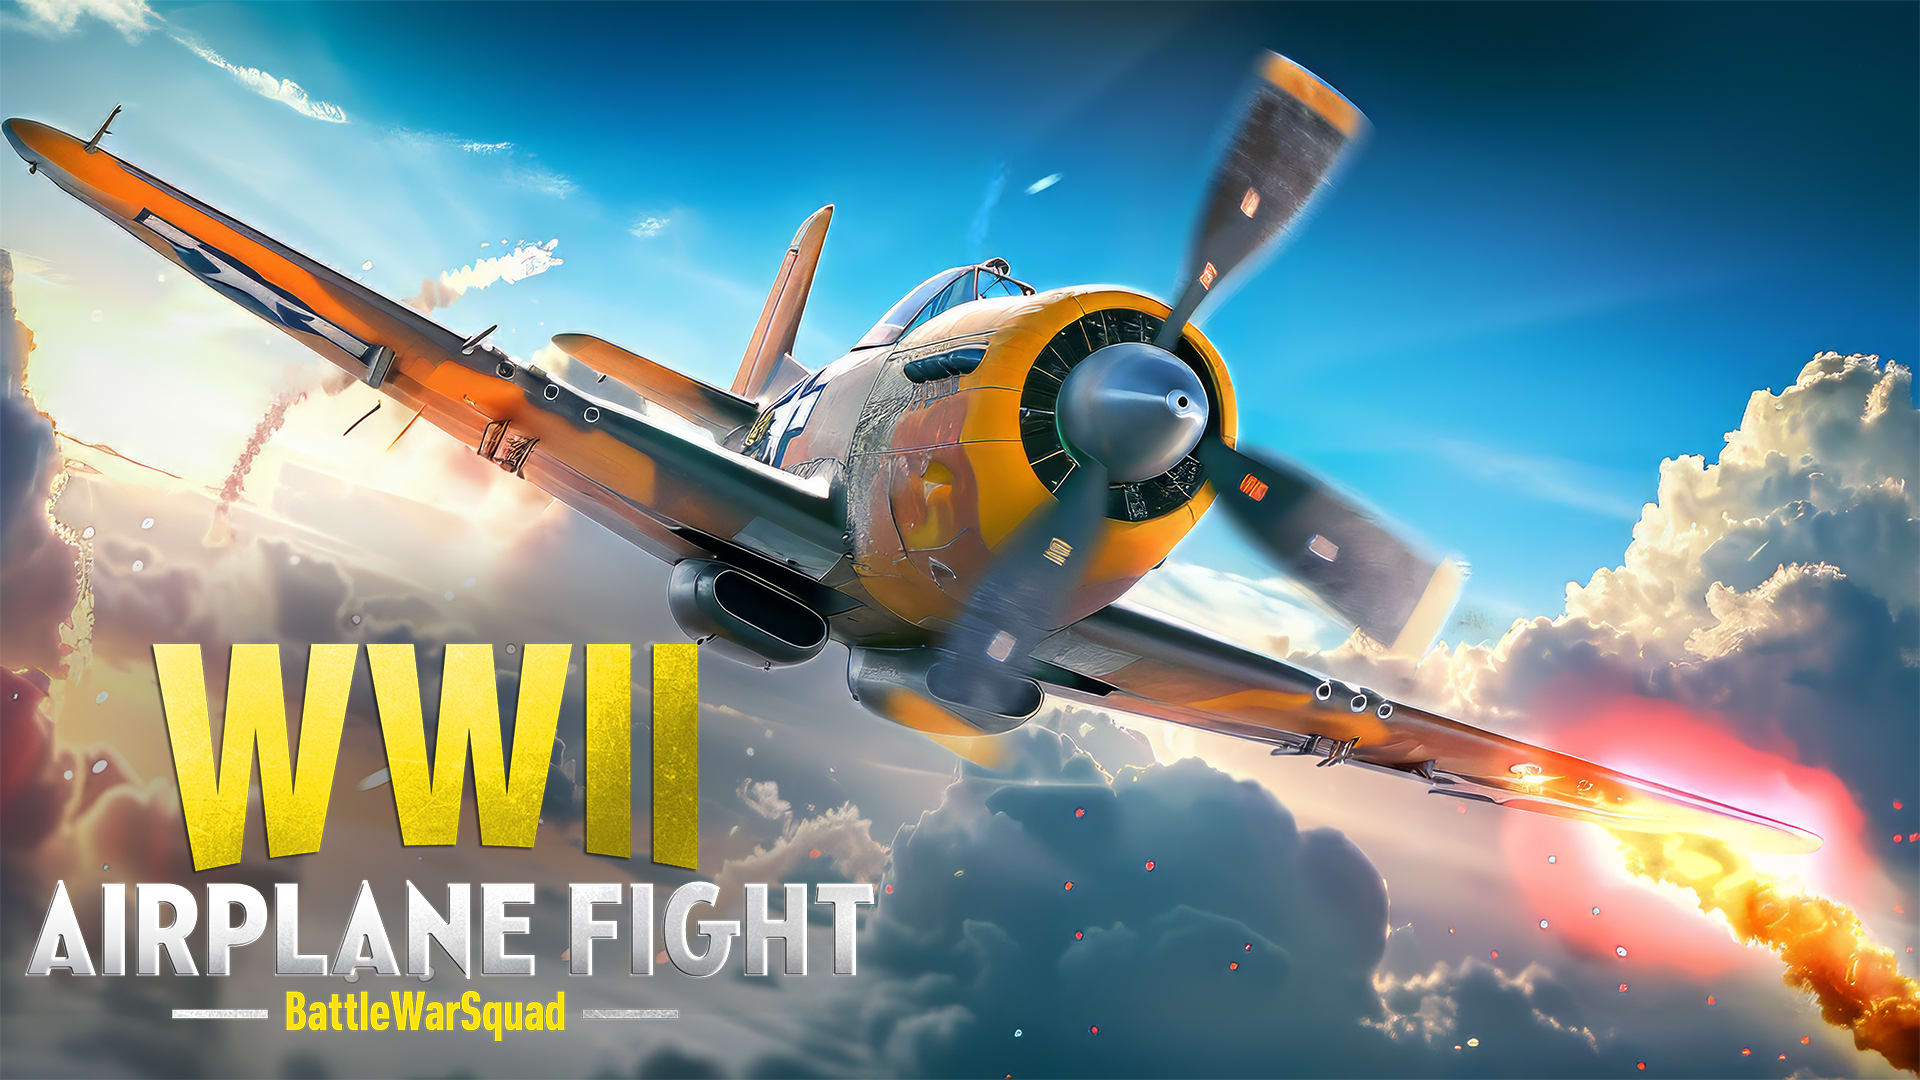 WWII AIRPLANE FIGHT - Battle War Squad